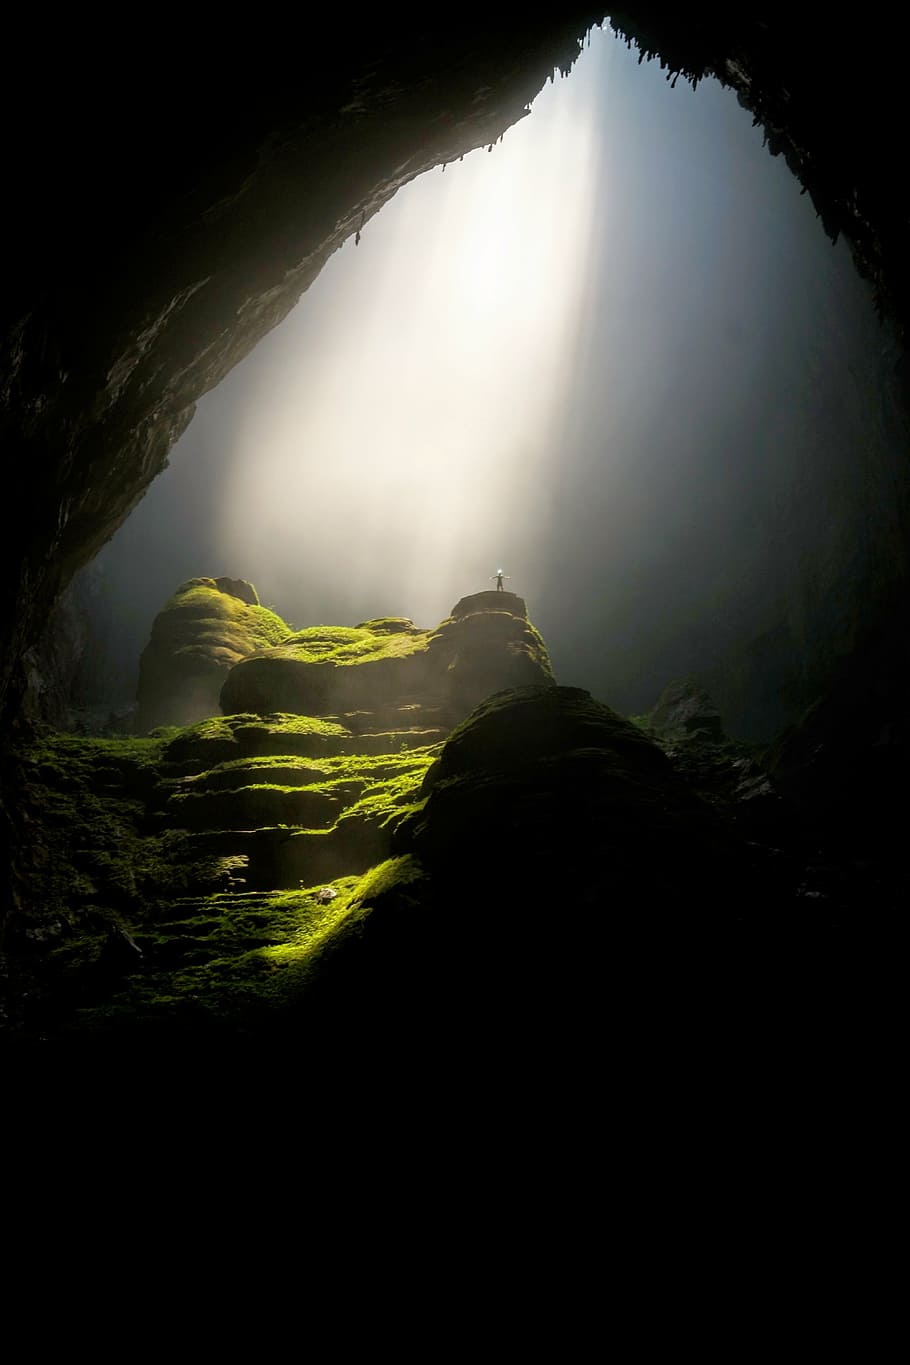 grass covered cave, cavern, dark, daylight, landscape, moss, nature